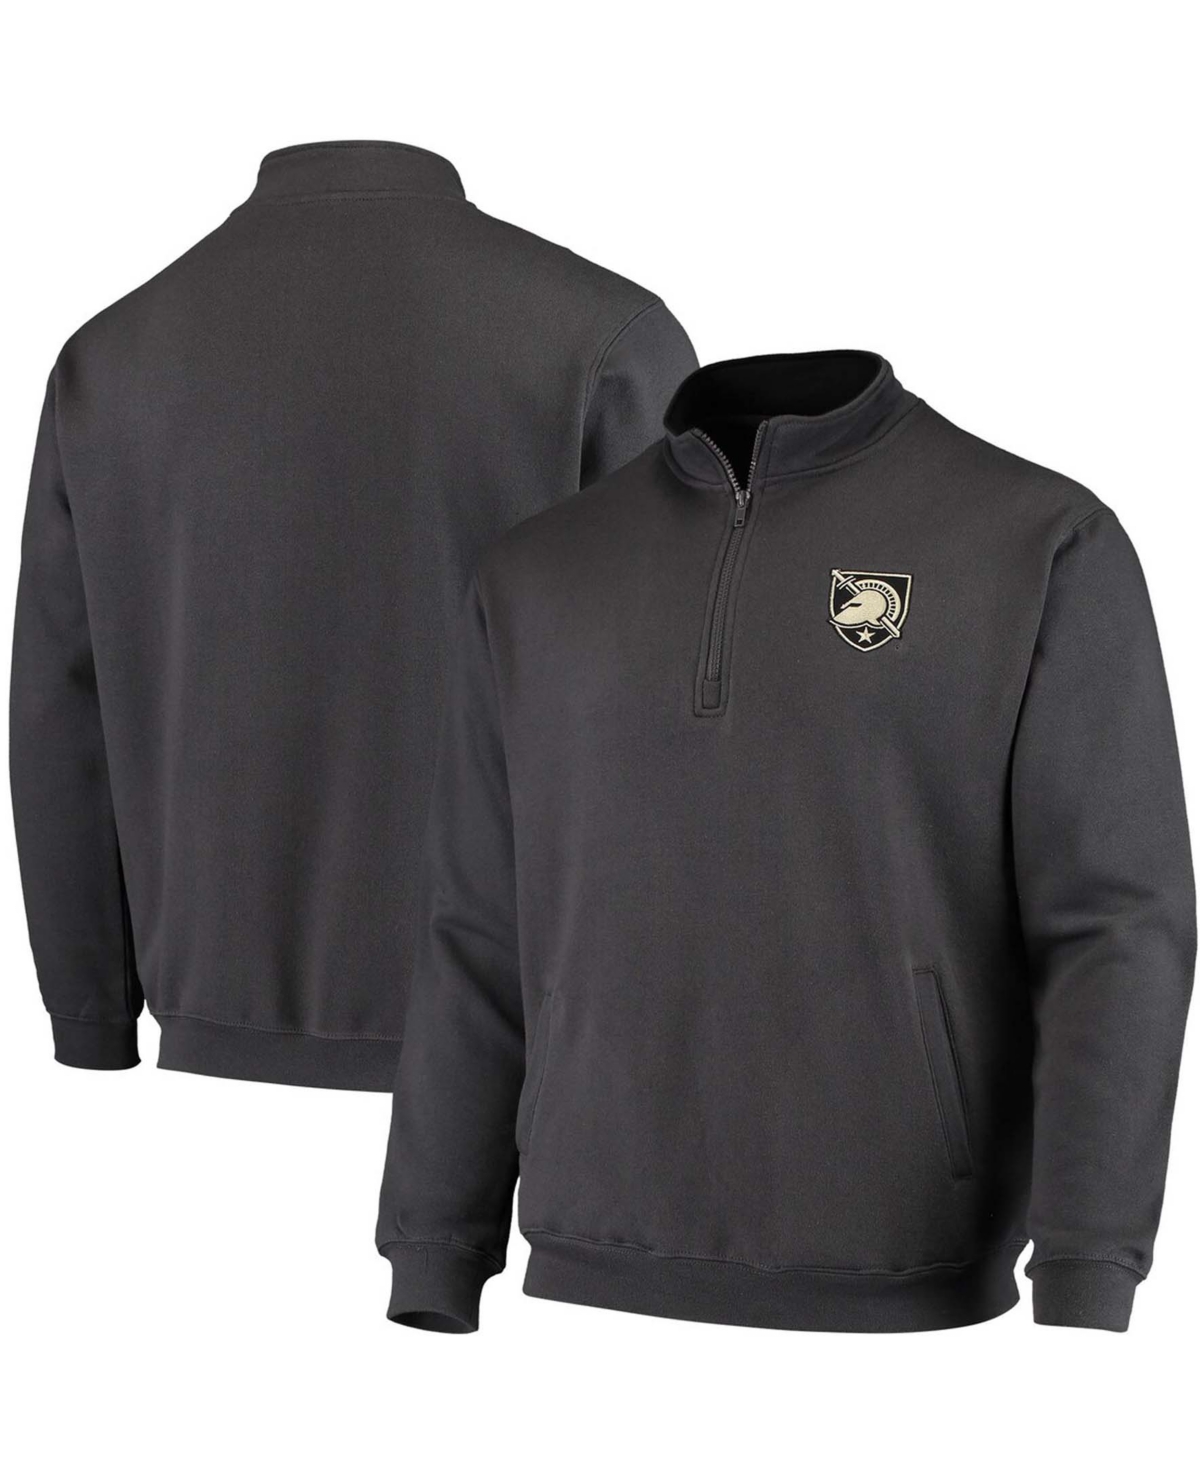 Men's Charcoal Army Black Knights Tortugas Logo Quarter-Zip Jacket - Charcoal